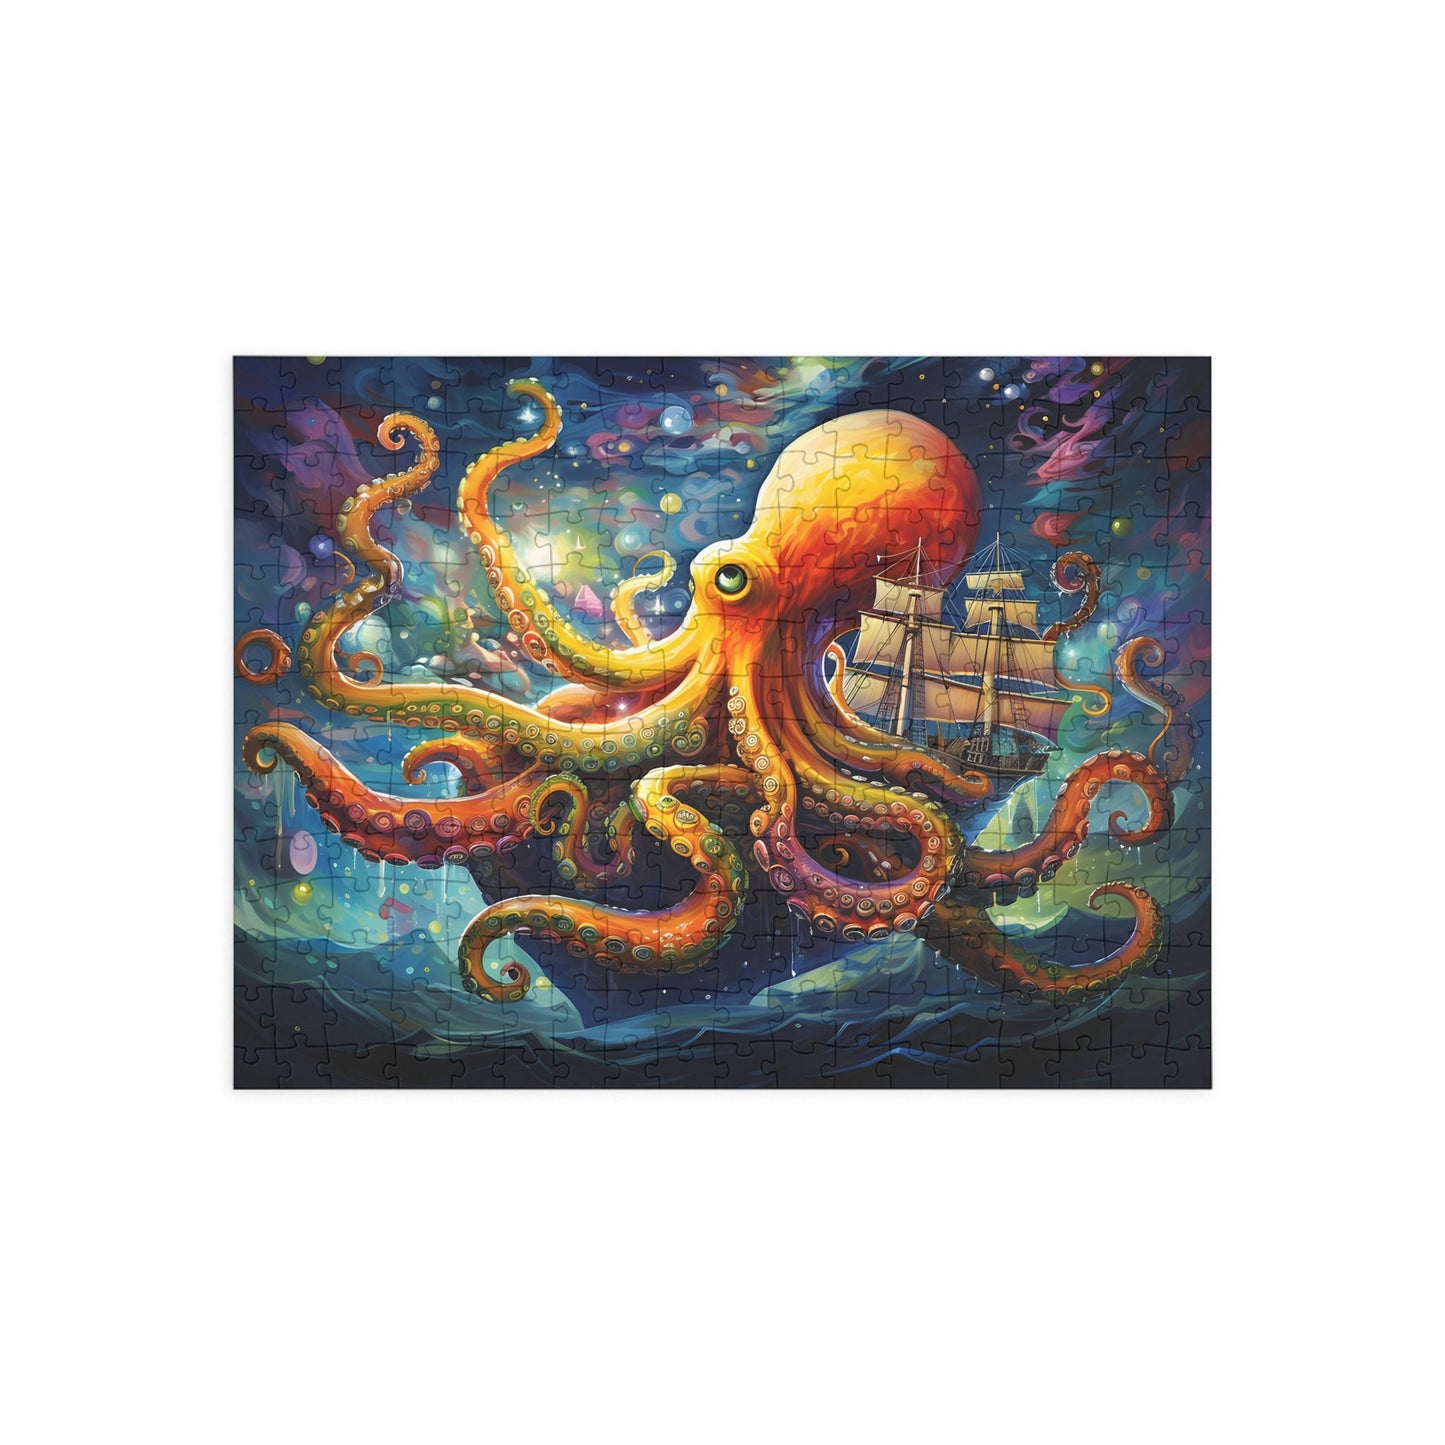 Majestic Kraken and Sailing Ship Odyssey Jigsaw Puzzle - Peatsy